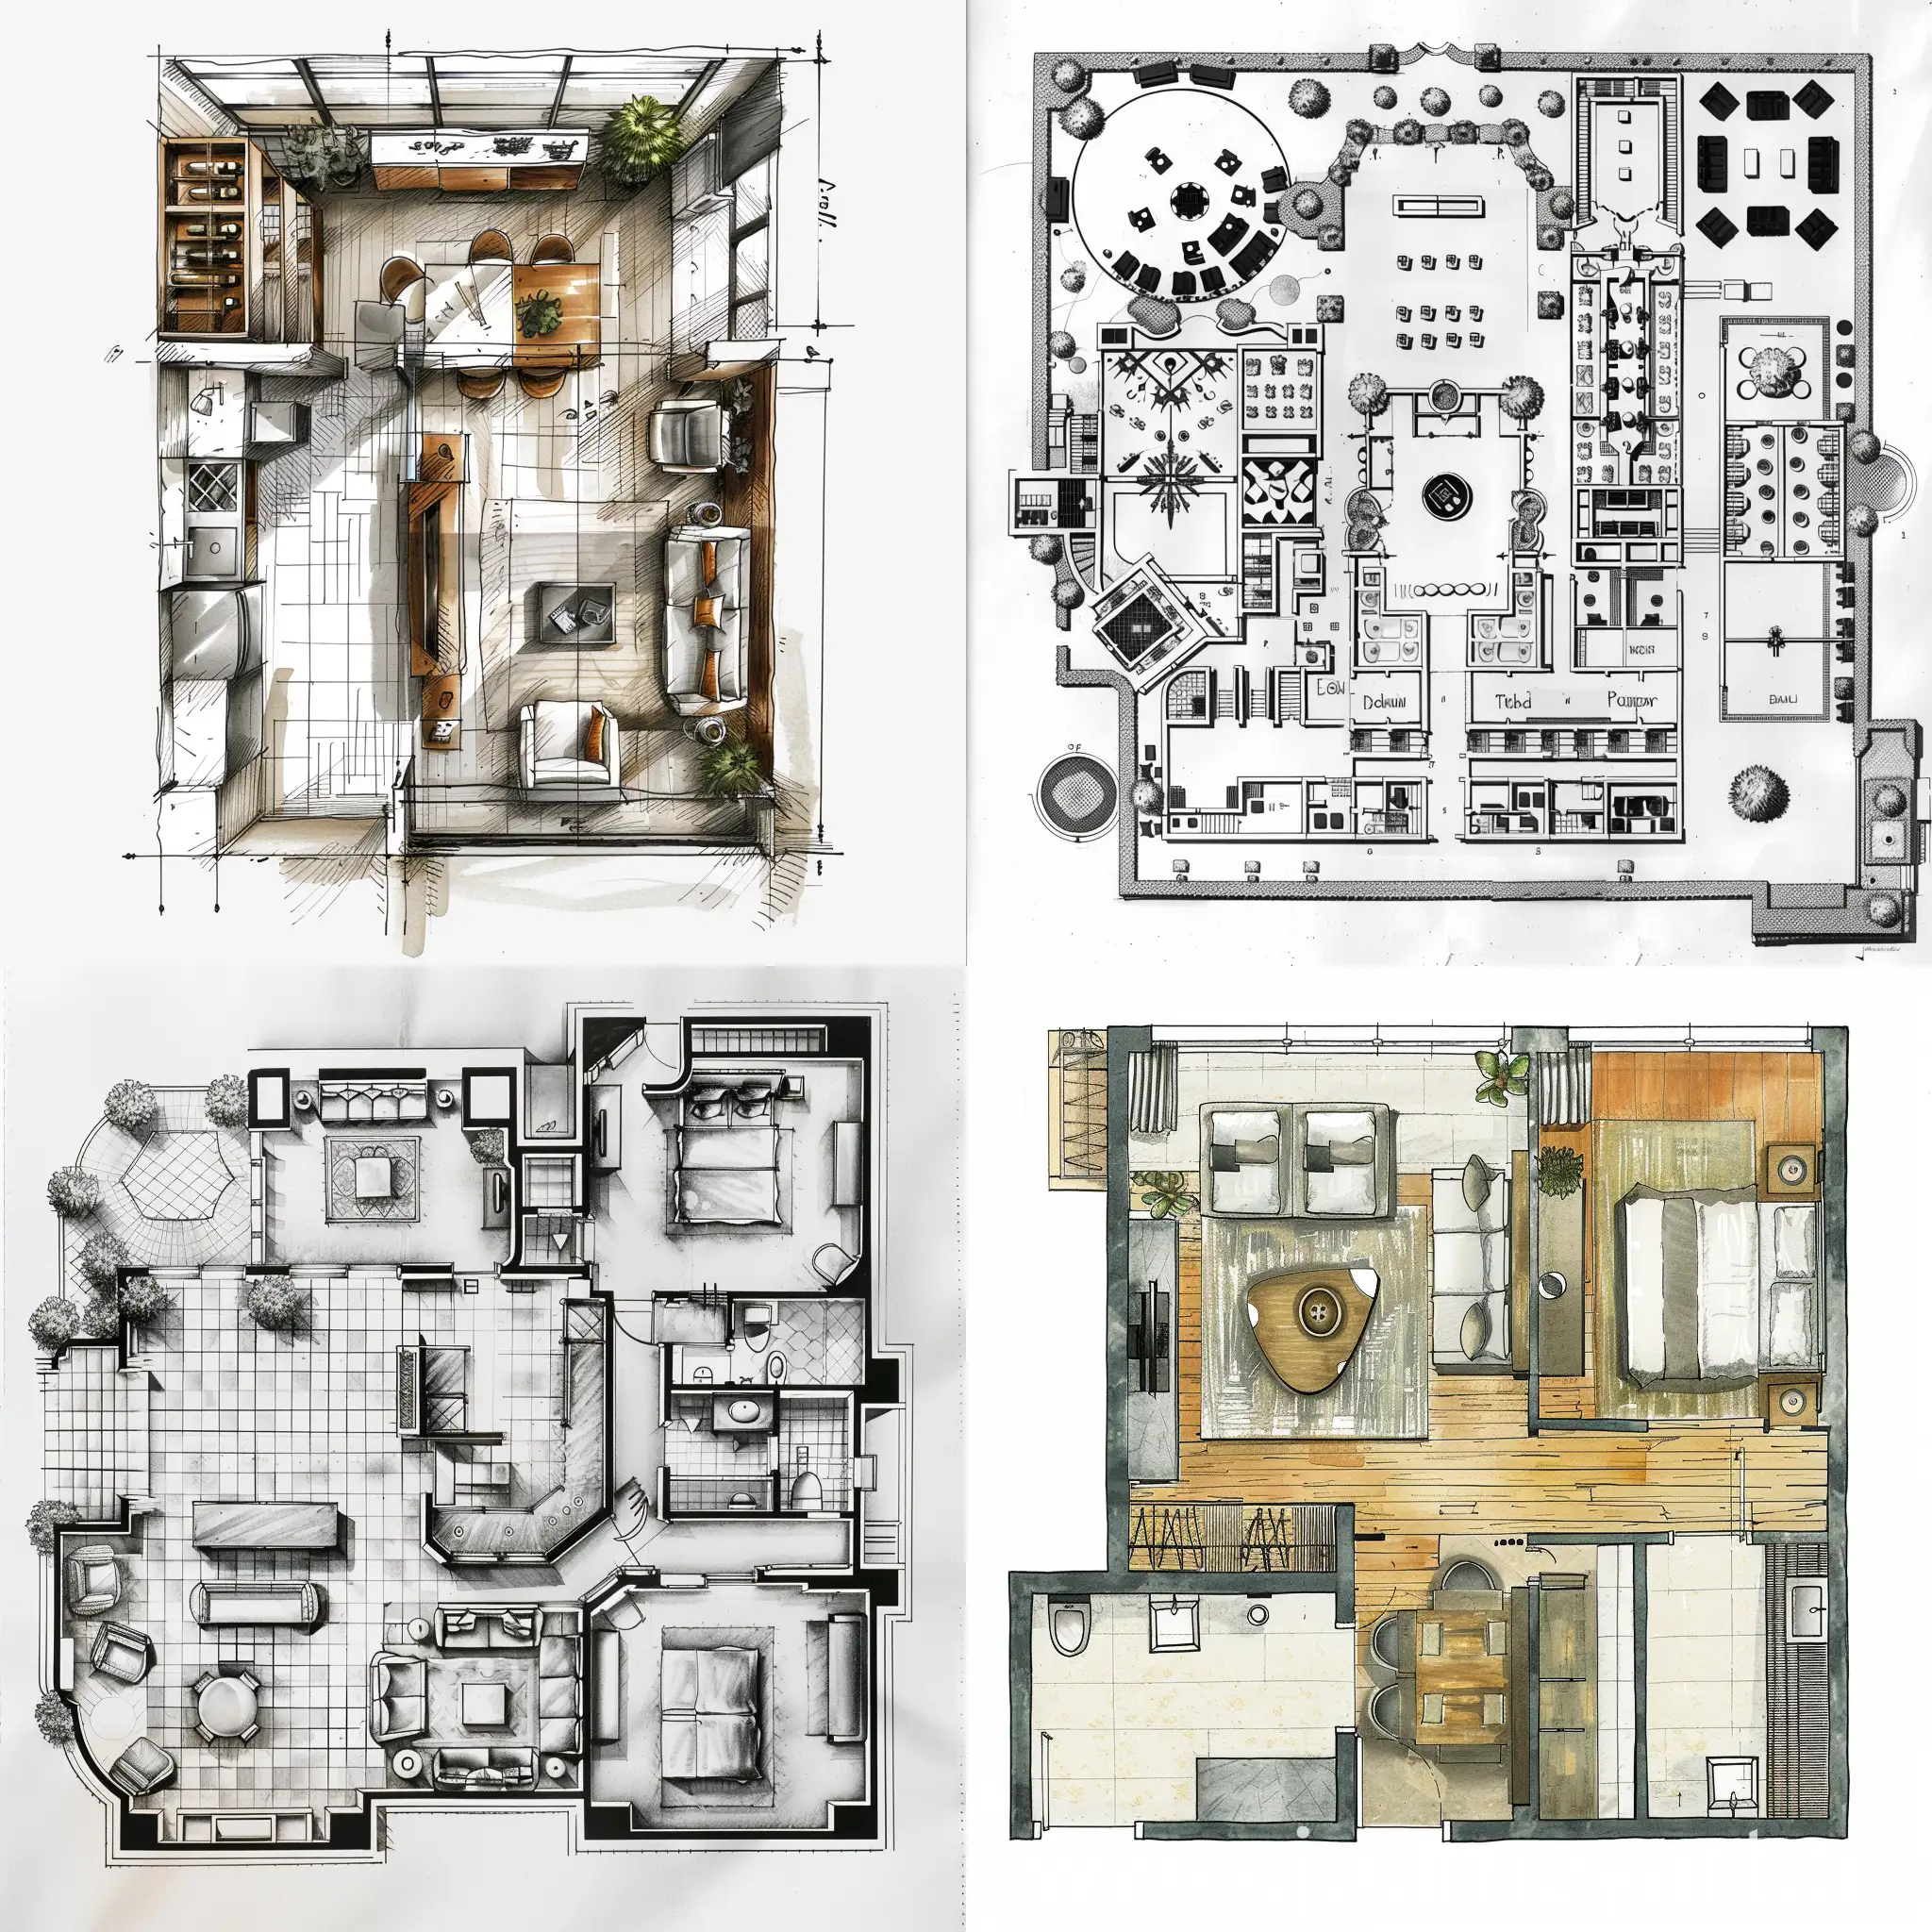 Modern-Bank-Interior-Design-Layout-Plan-with-86317-Elements